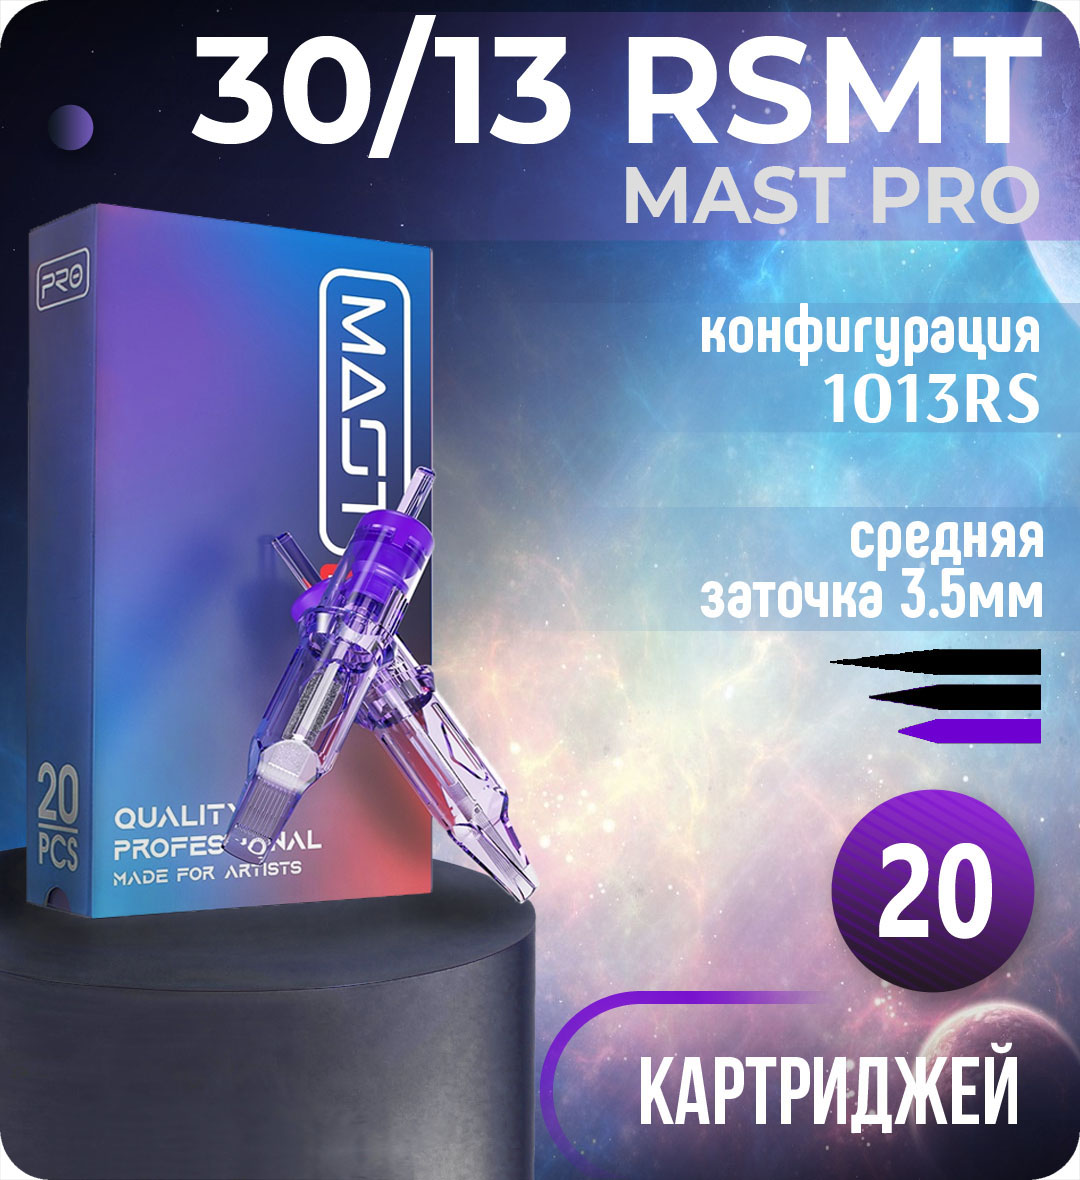 Картриджи Mast Pro 30/13 RSMT (1013RS) для тату, перманентного макияжа и татуажа Dragonhawk 20шт